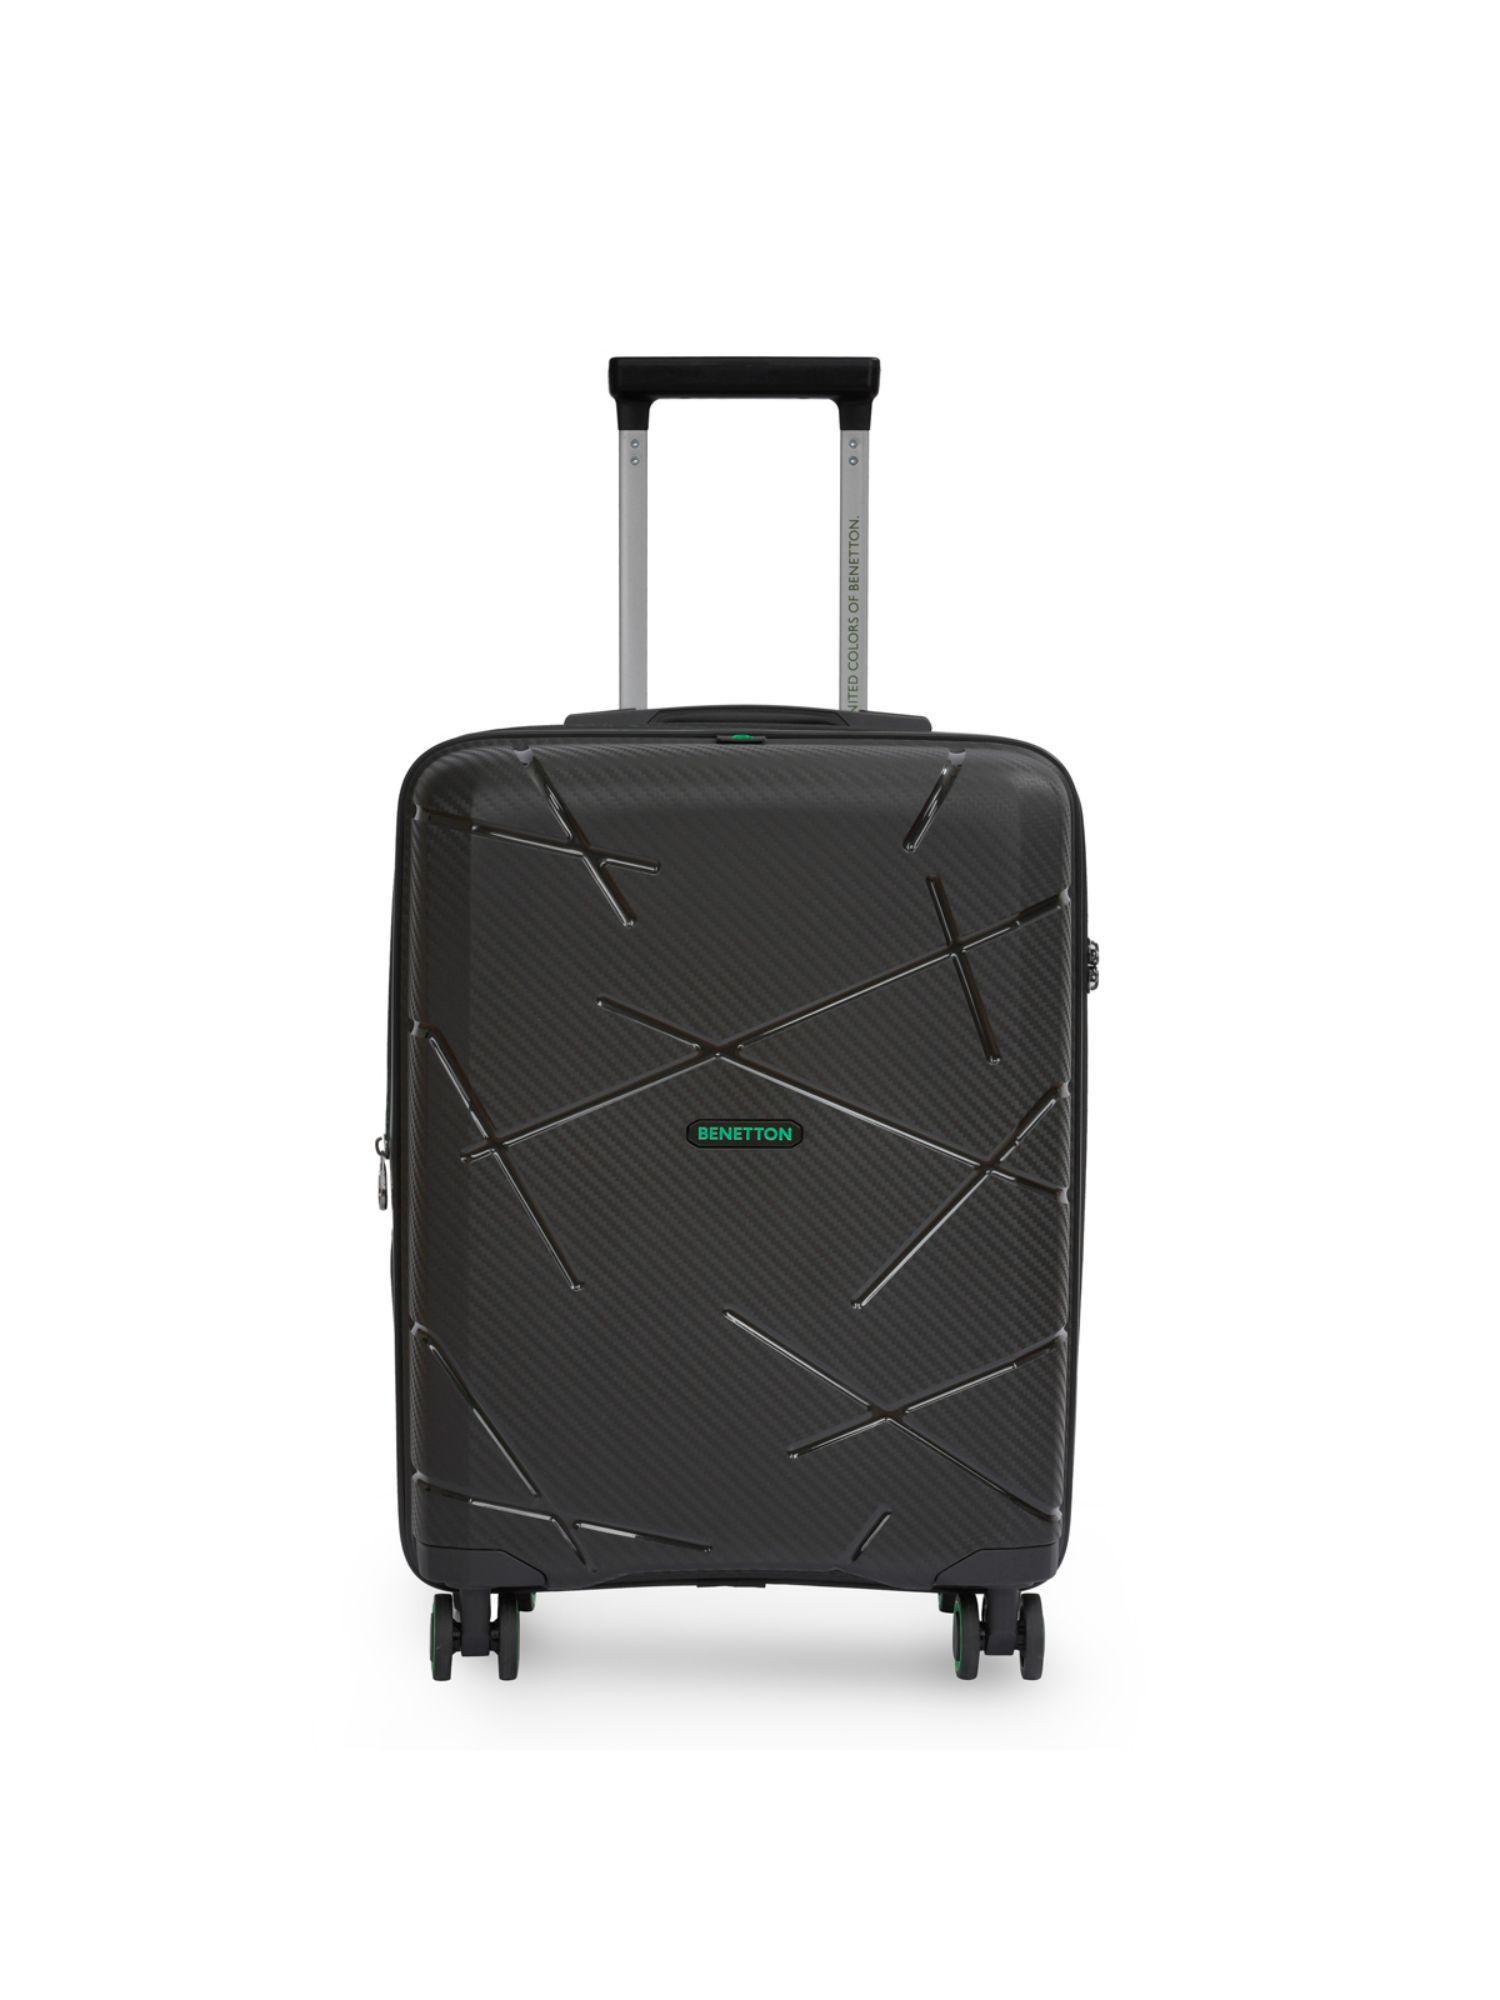 moonstone unisex hard luggage black tsa lock trolley bag